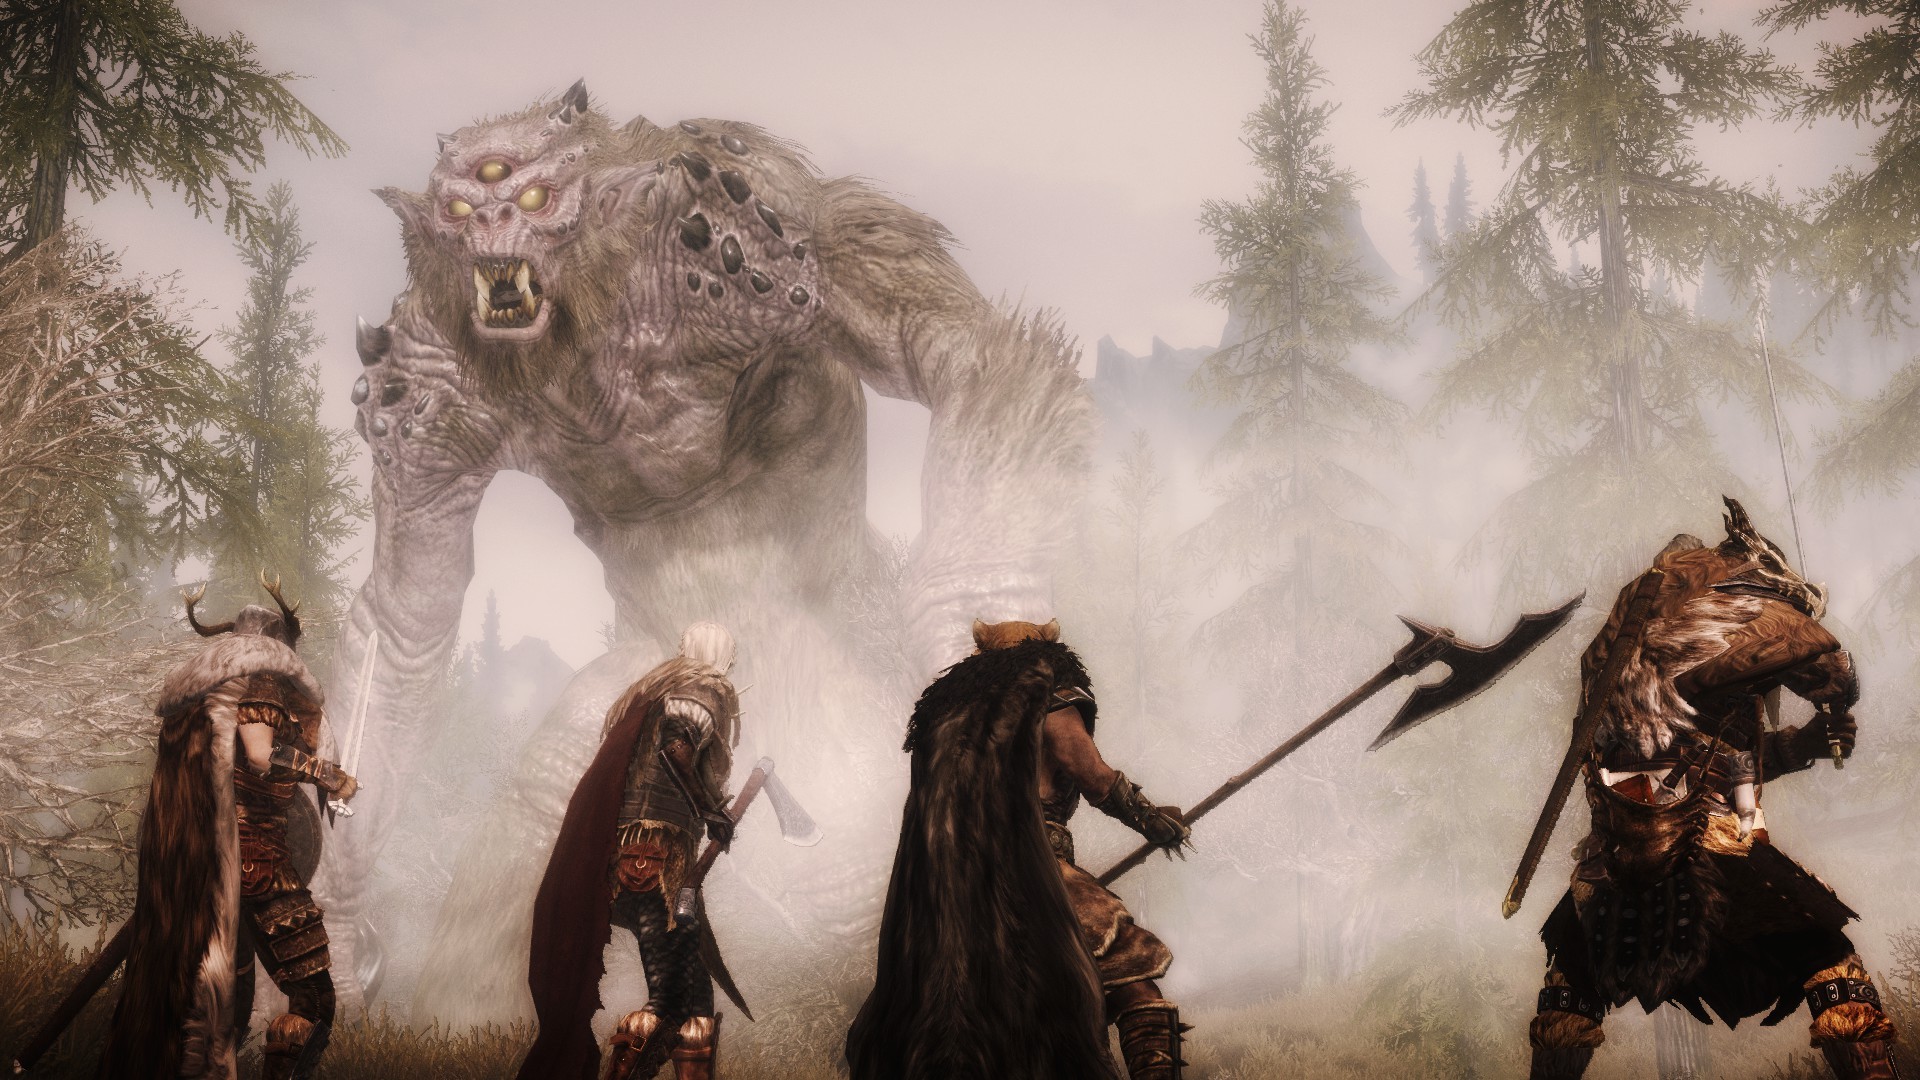 General 1920x1080 fantasy art digital art artwork weapon warrior fighting angry mist The Elder Scrolls V: Skyrim RPG video games PC gaming creature